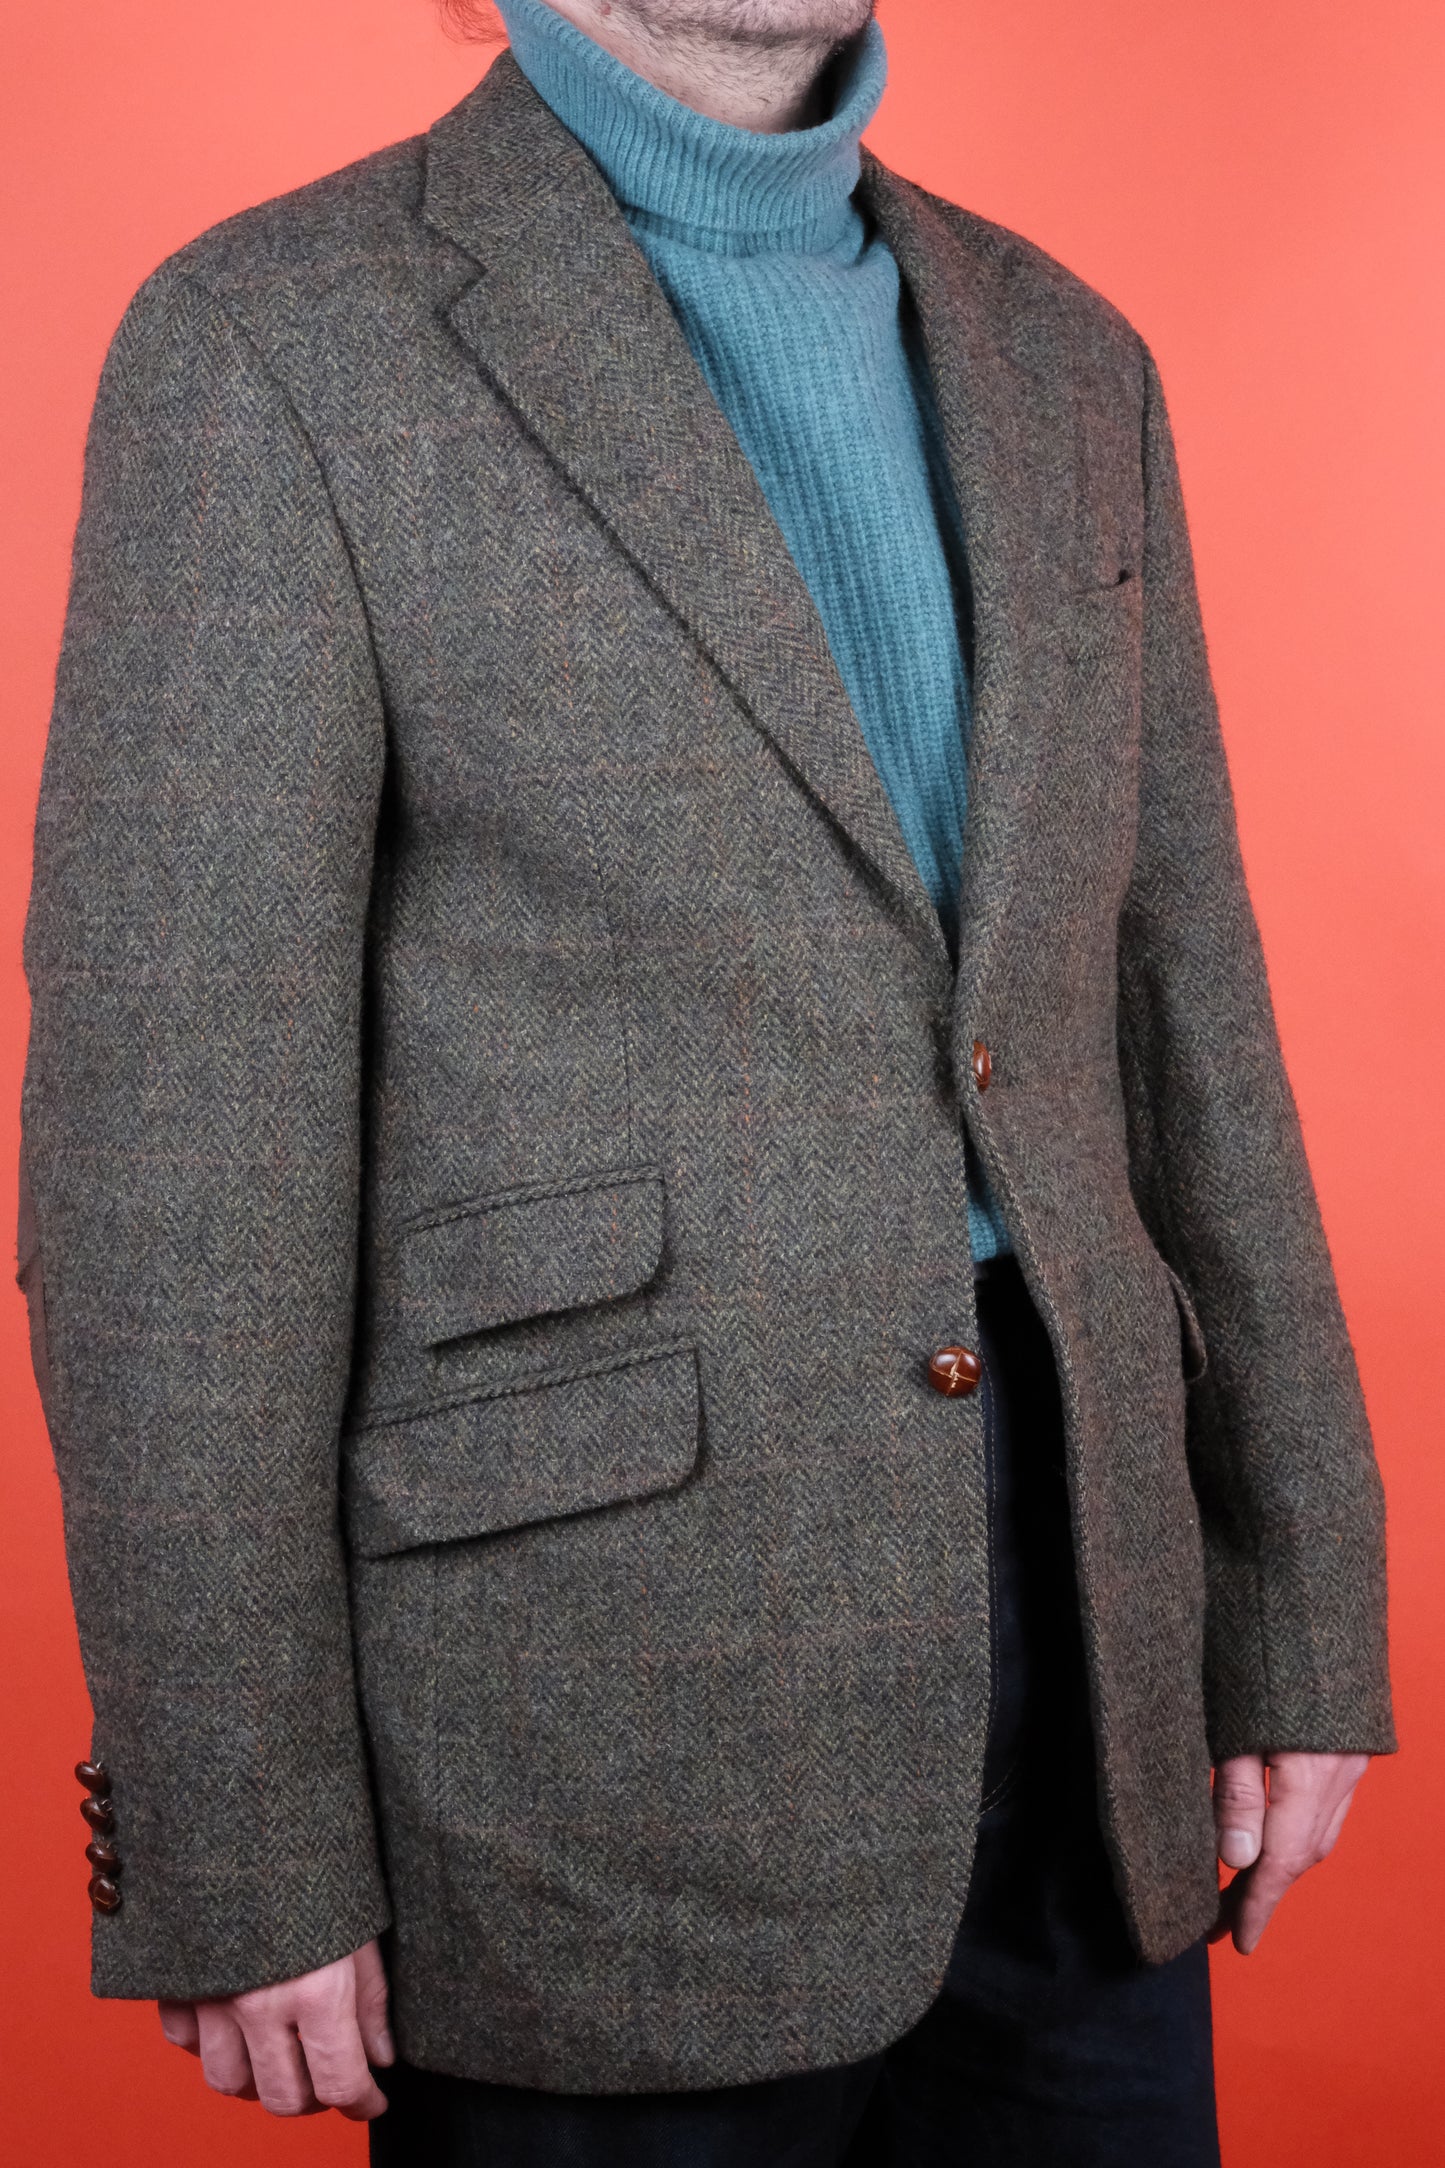 J. Phillip Harris Tweed Suit Jacket 'L' - vintage clothing clochard92.com